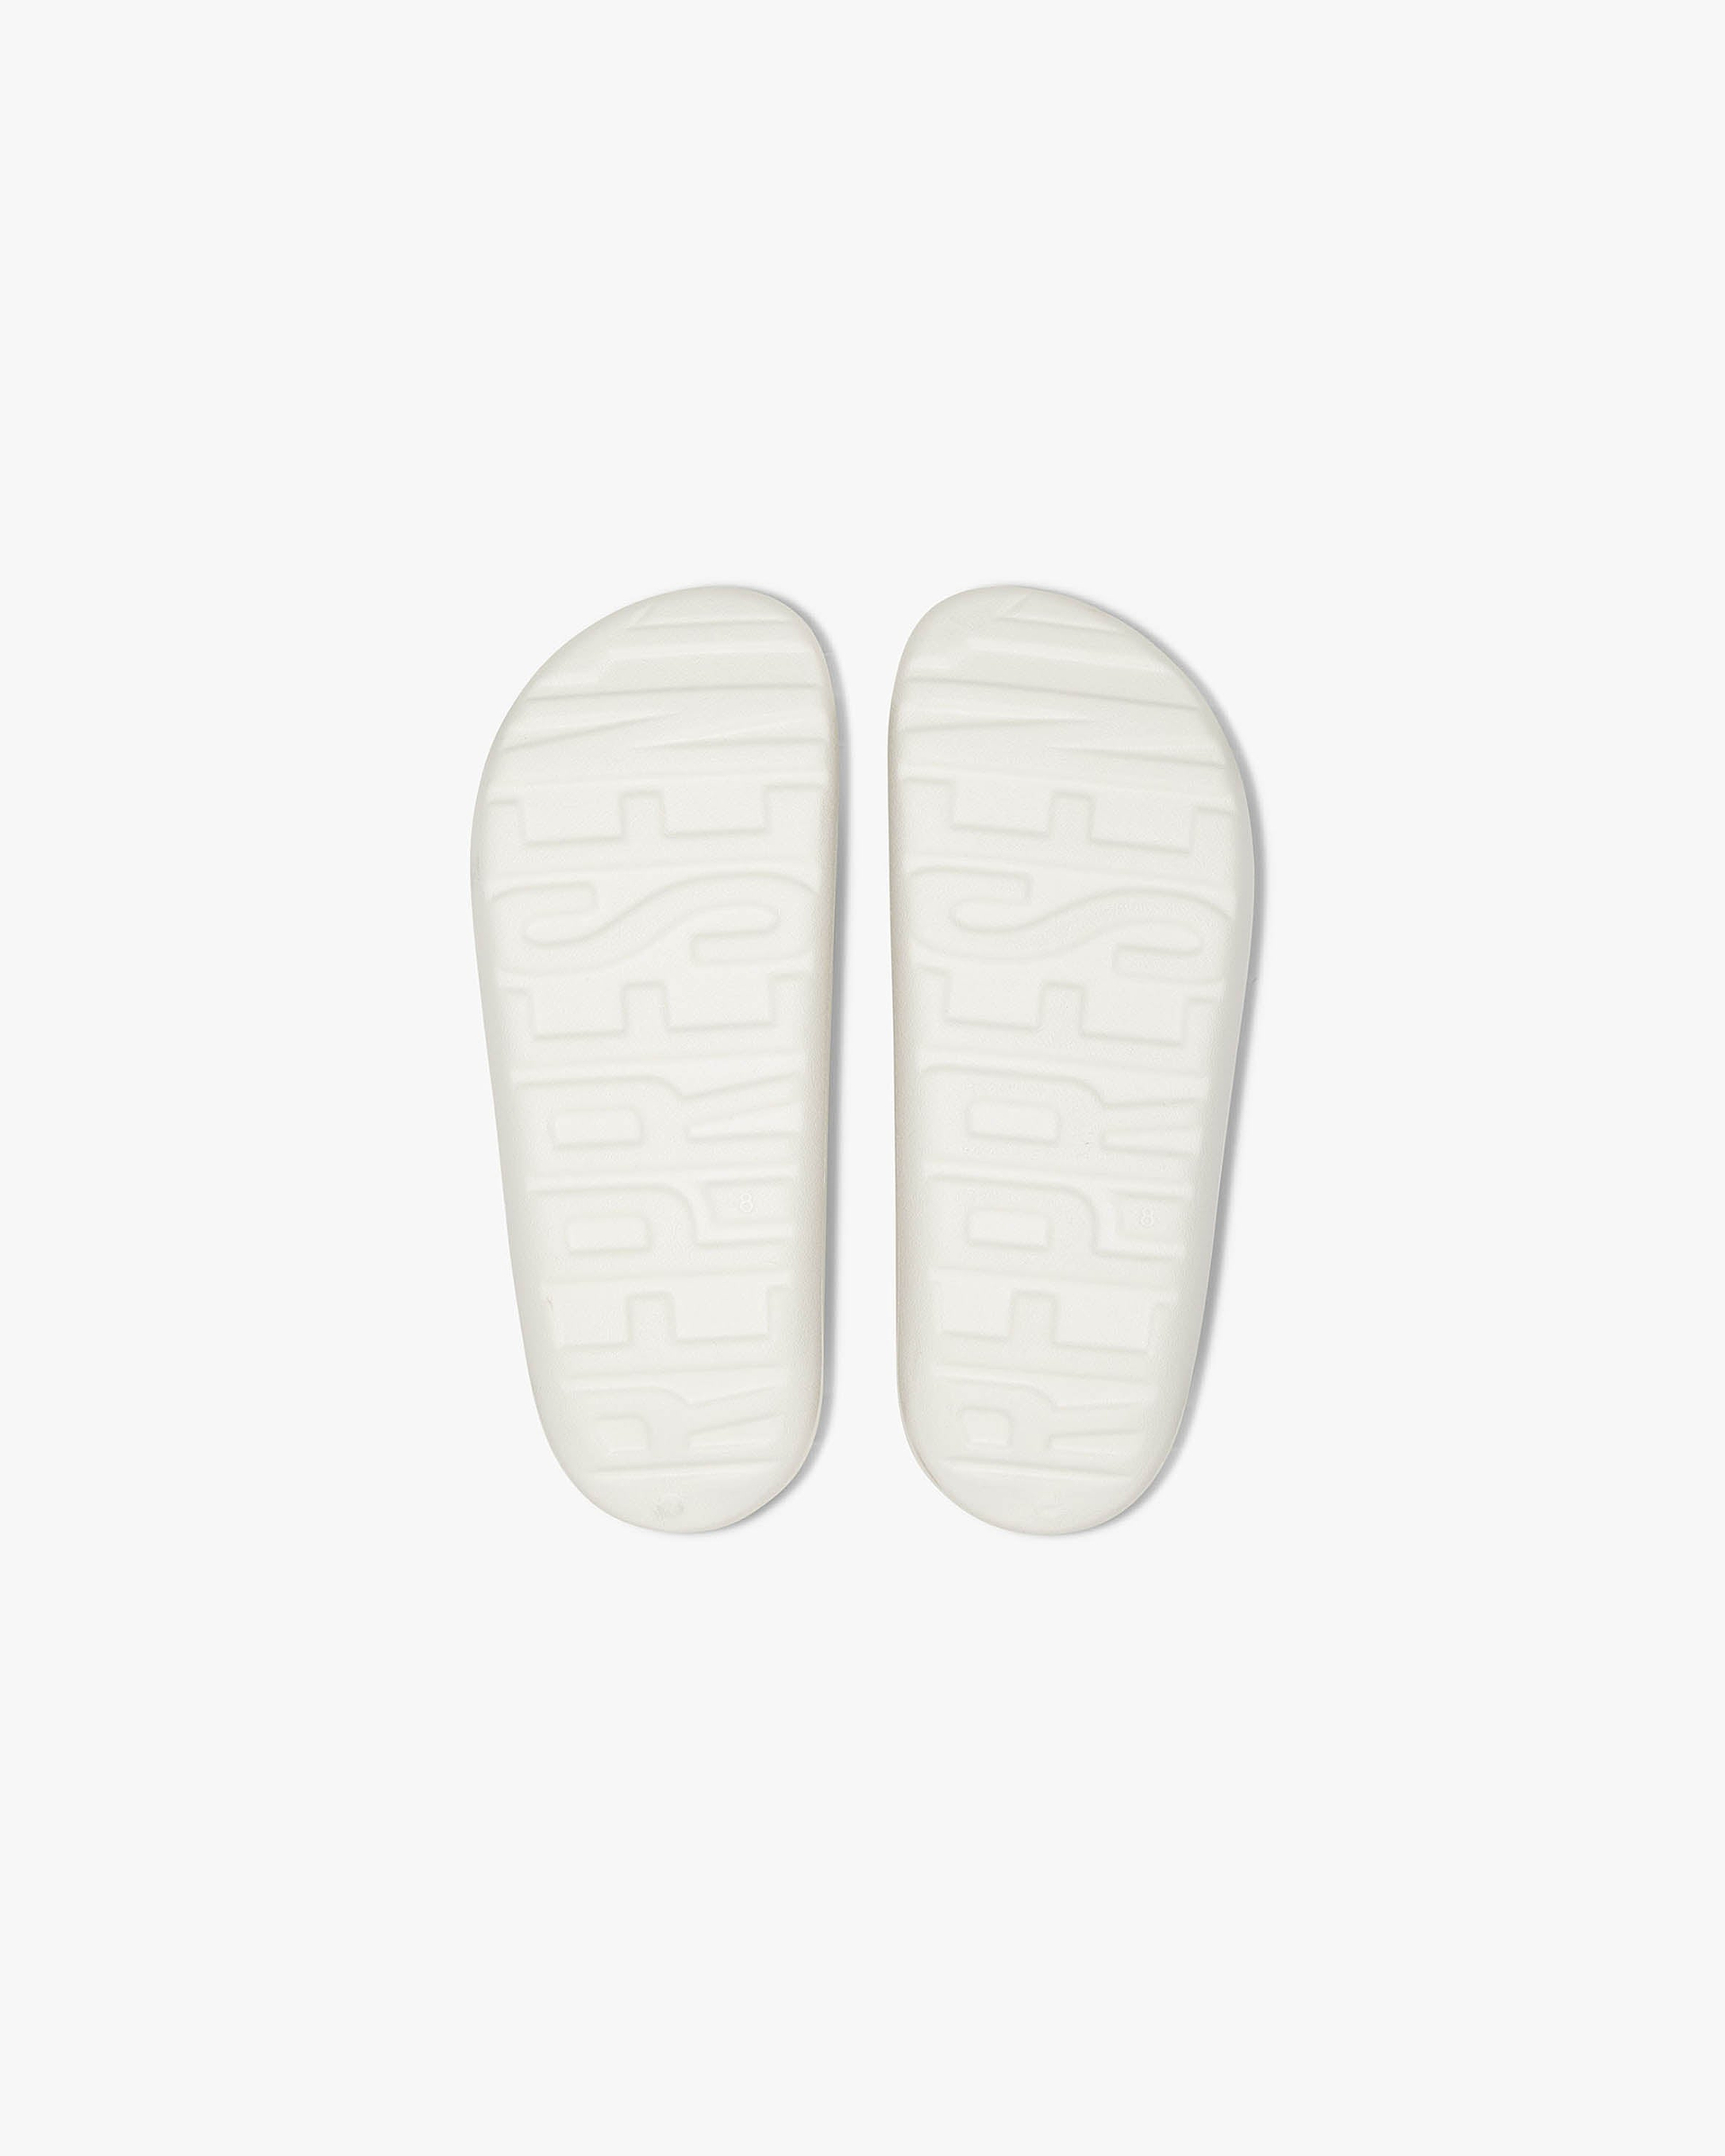 Sliders | Flat White Footwear | REPRESENT CLO